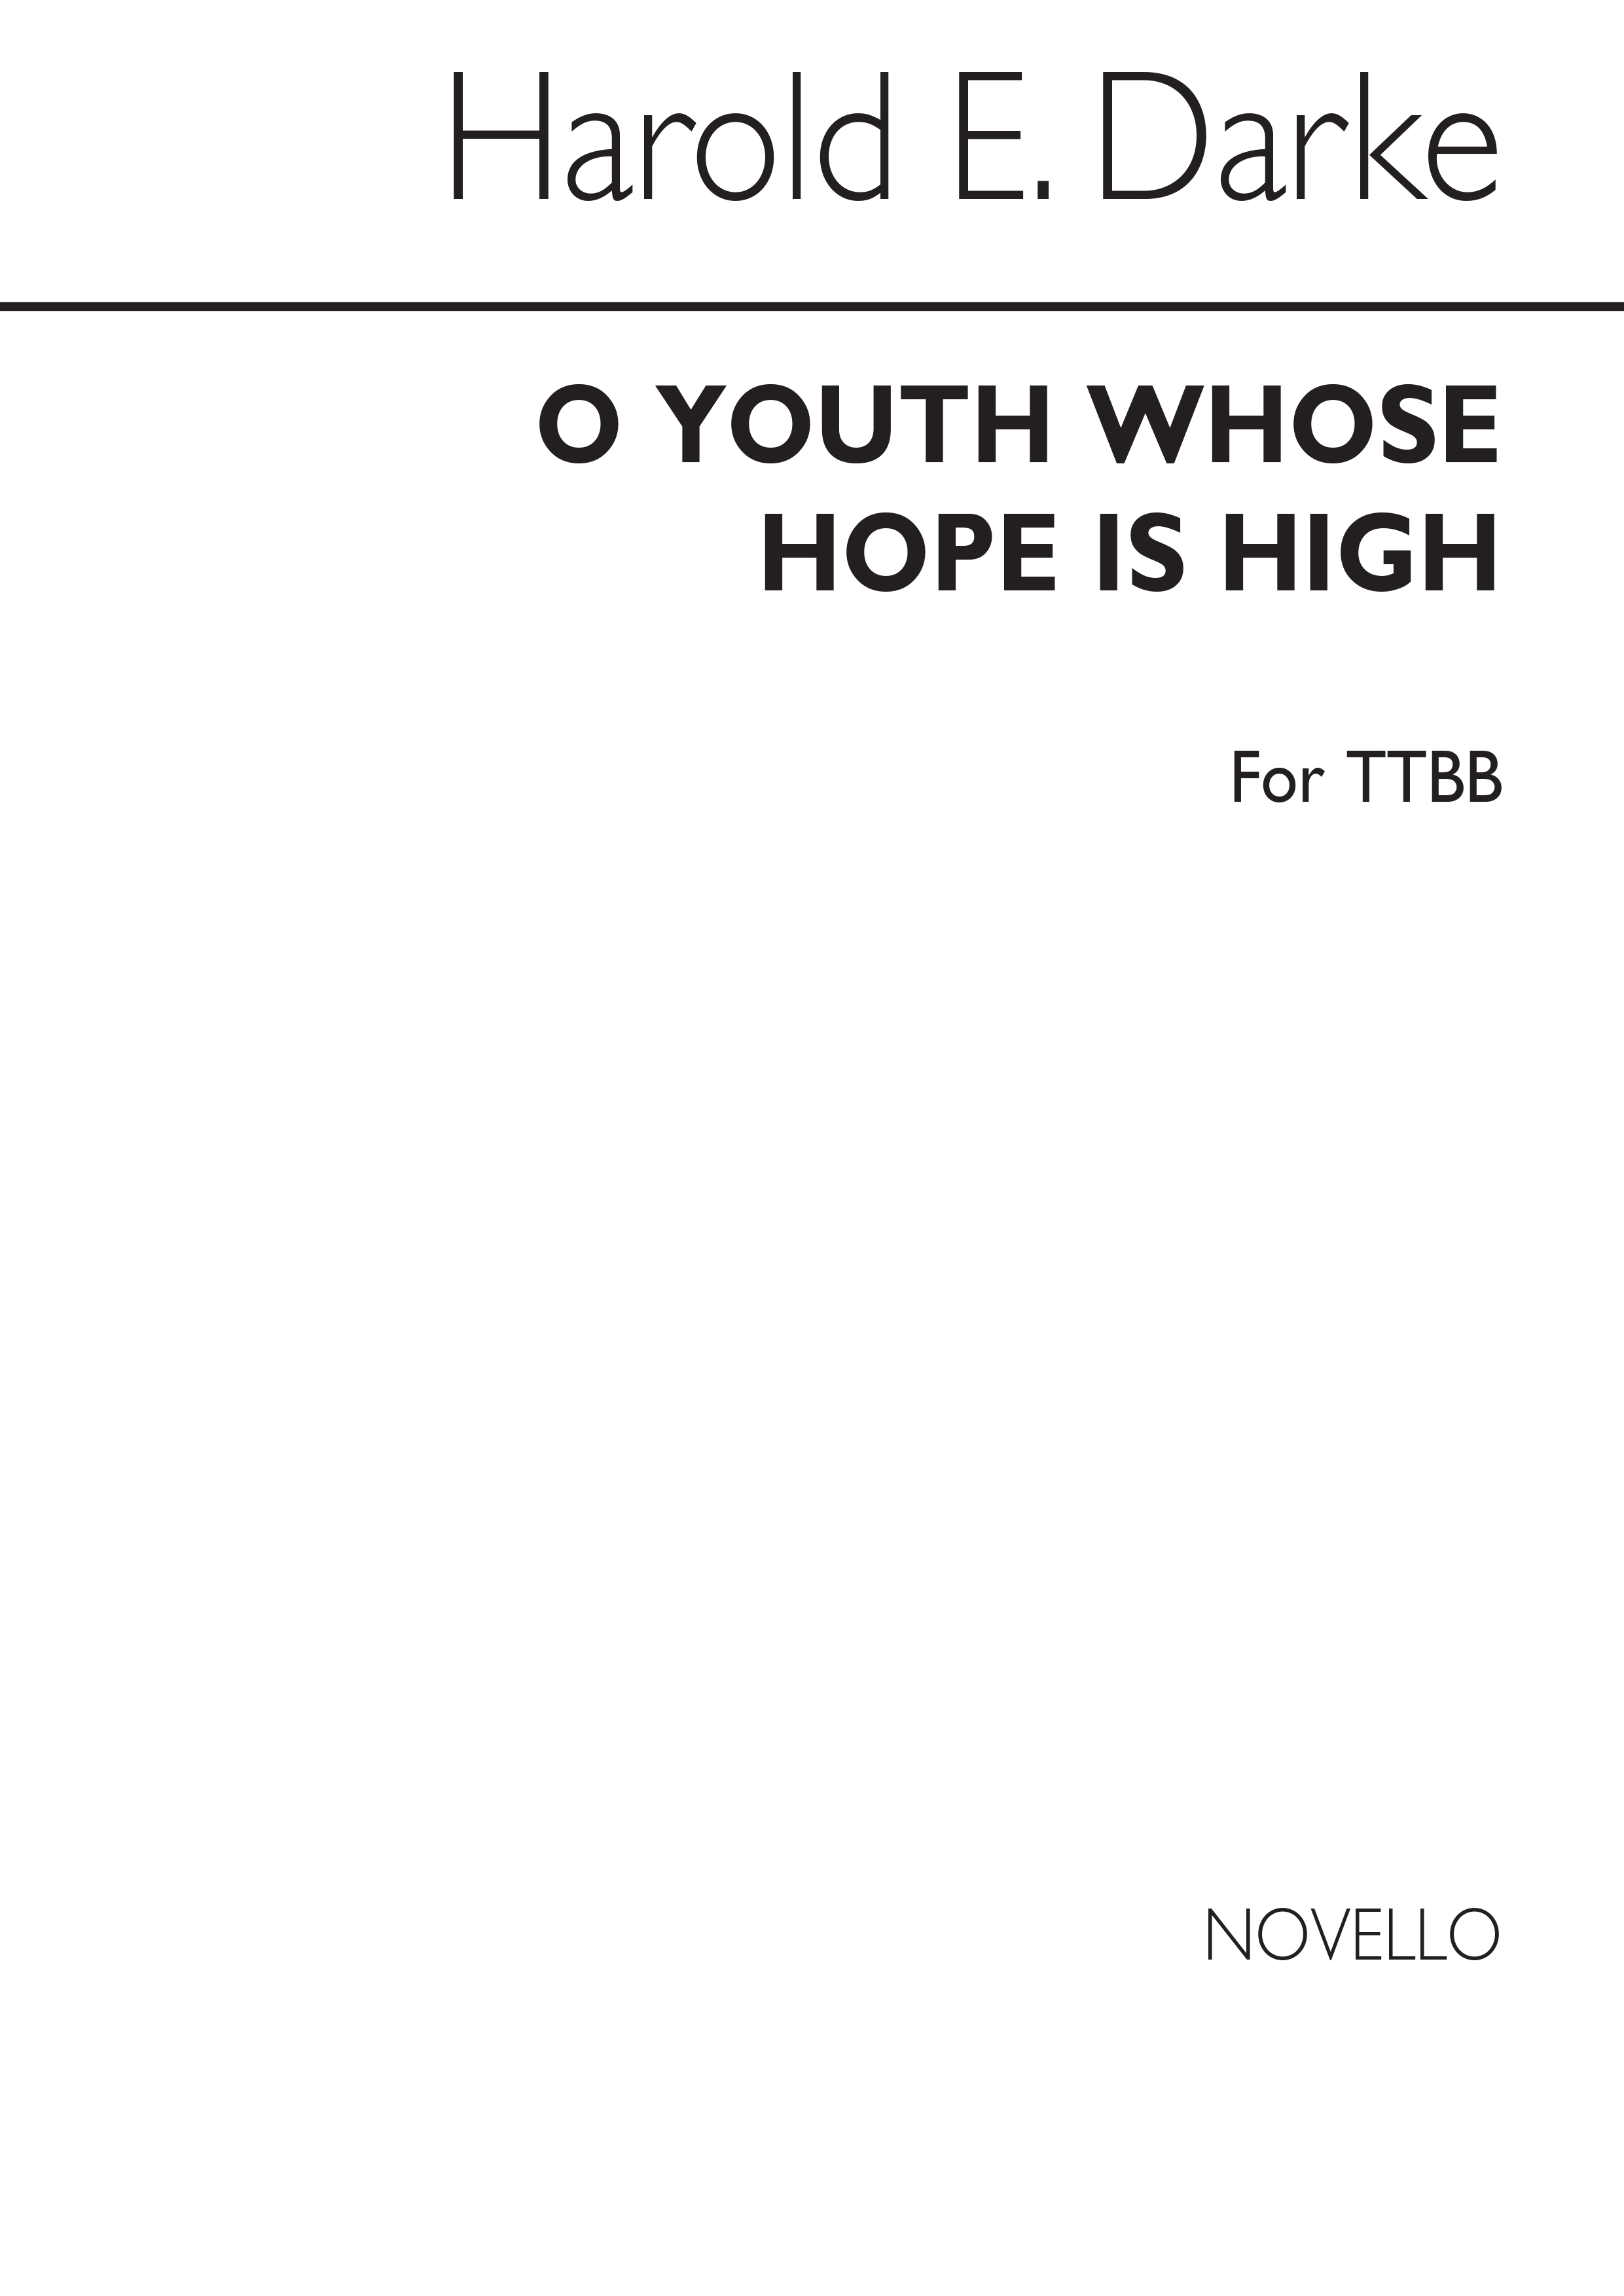 Darke: O Youth Whose Hope Is High for TTBB Chorus